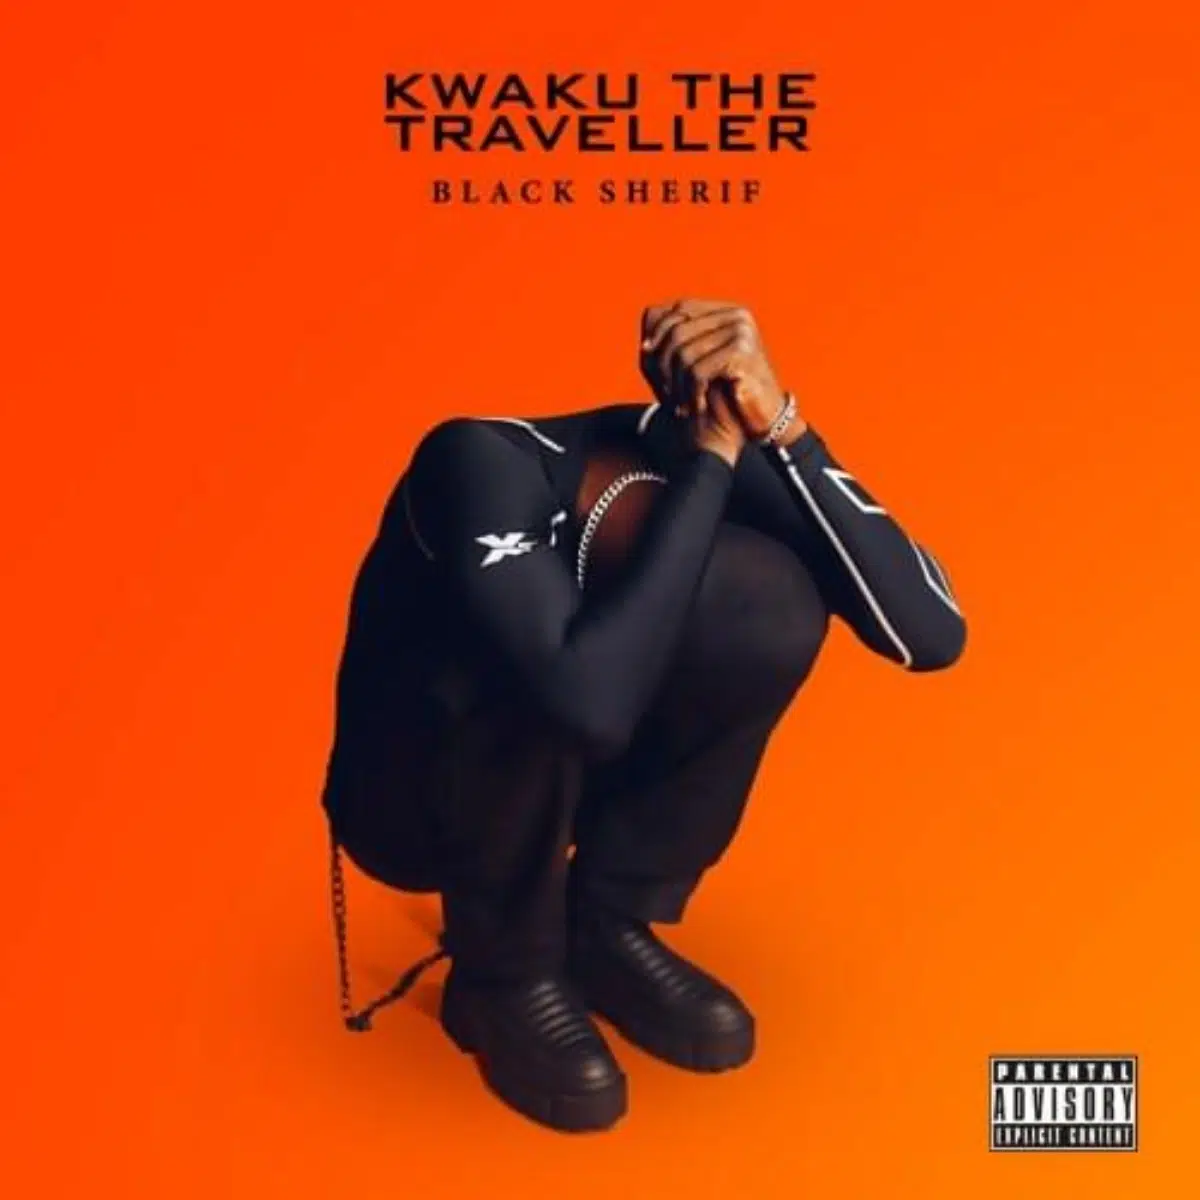 DOWNLOAD: Black Sherif – “Kwaku The Traveller” Audio Mp3